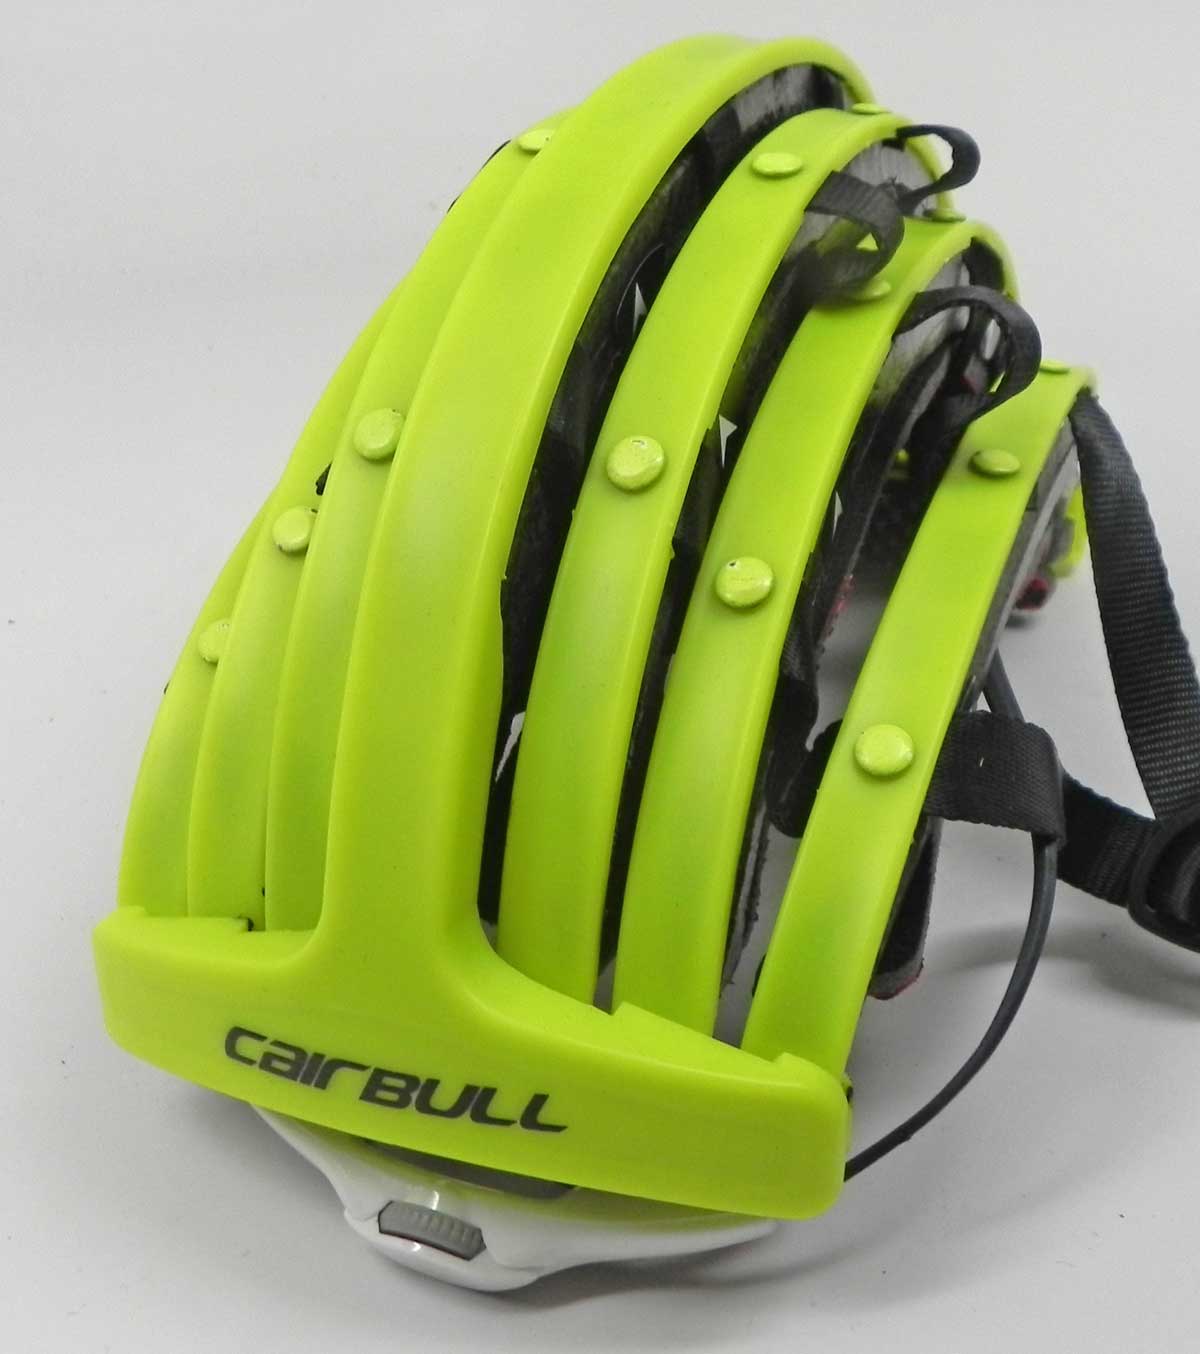 Cairbull helmet image